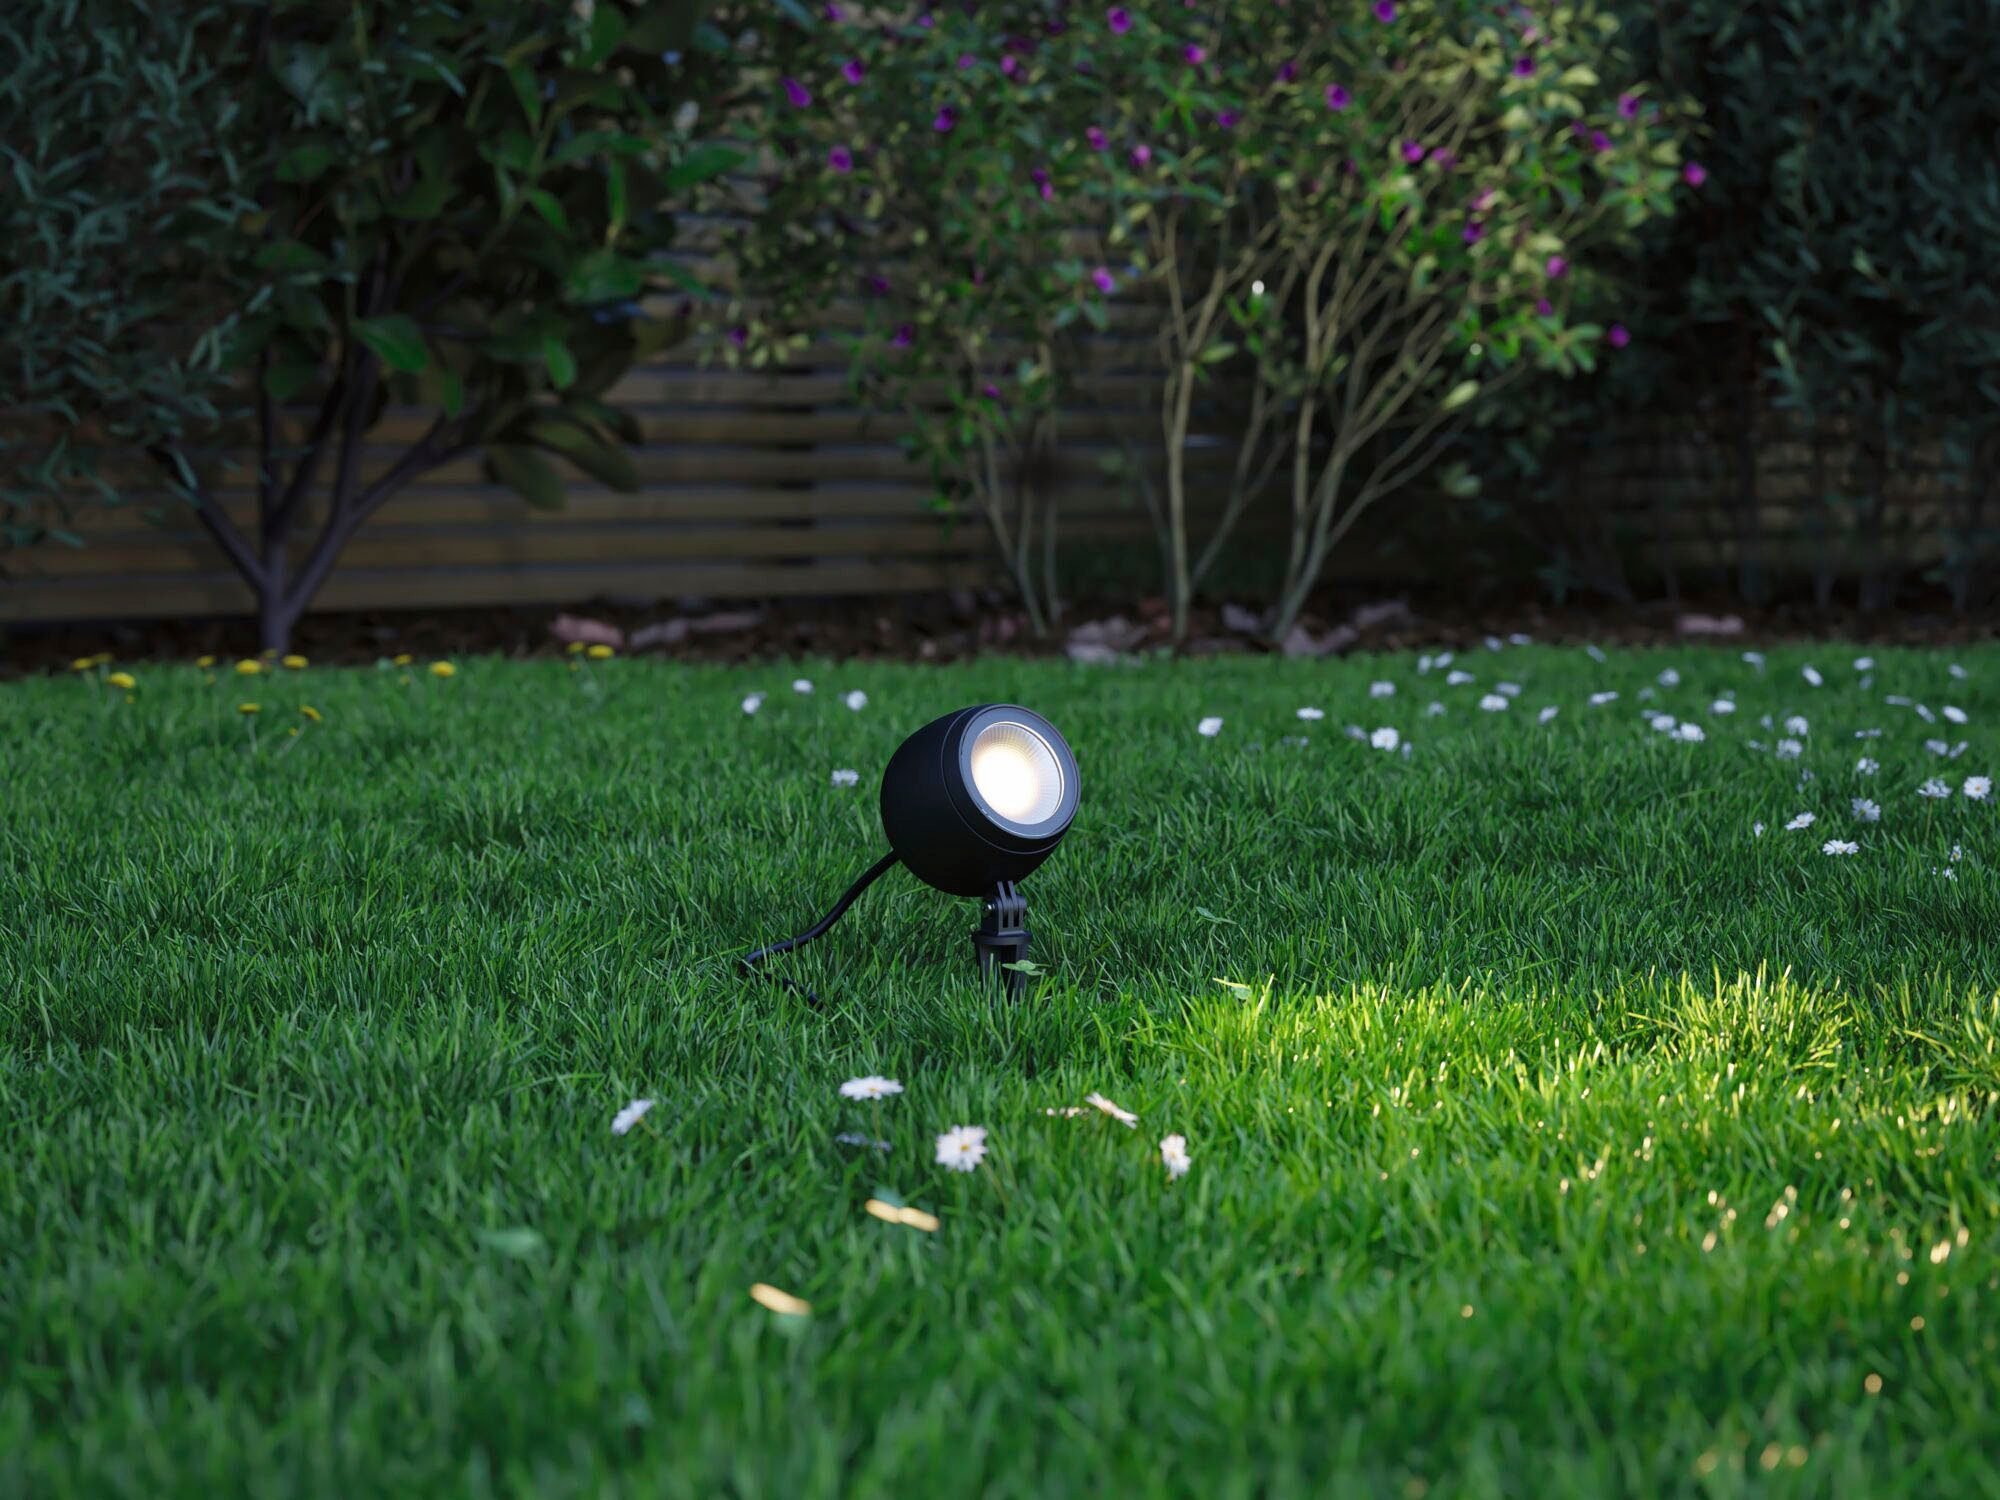 Paulmann LED Gartenleuchte Outdoor 230V Spot Kikolo Insect friendly ZigBee, LED  fest integriert, Warmweiß, Insektenfreundlich, Gartenbeleuchtung mit  Erdspieß setzt Pflanzen in Szene | Pollerleuchten